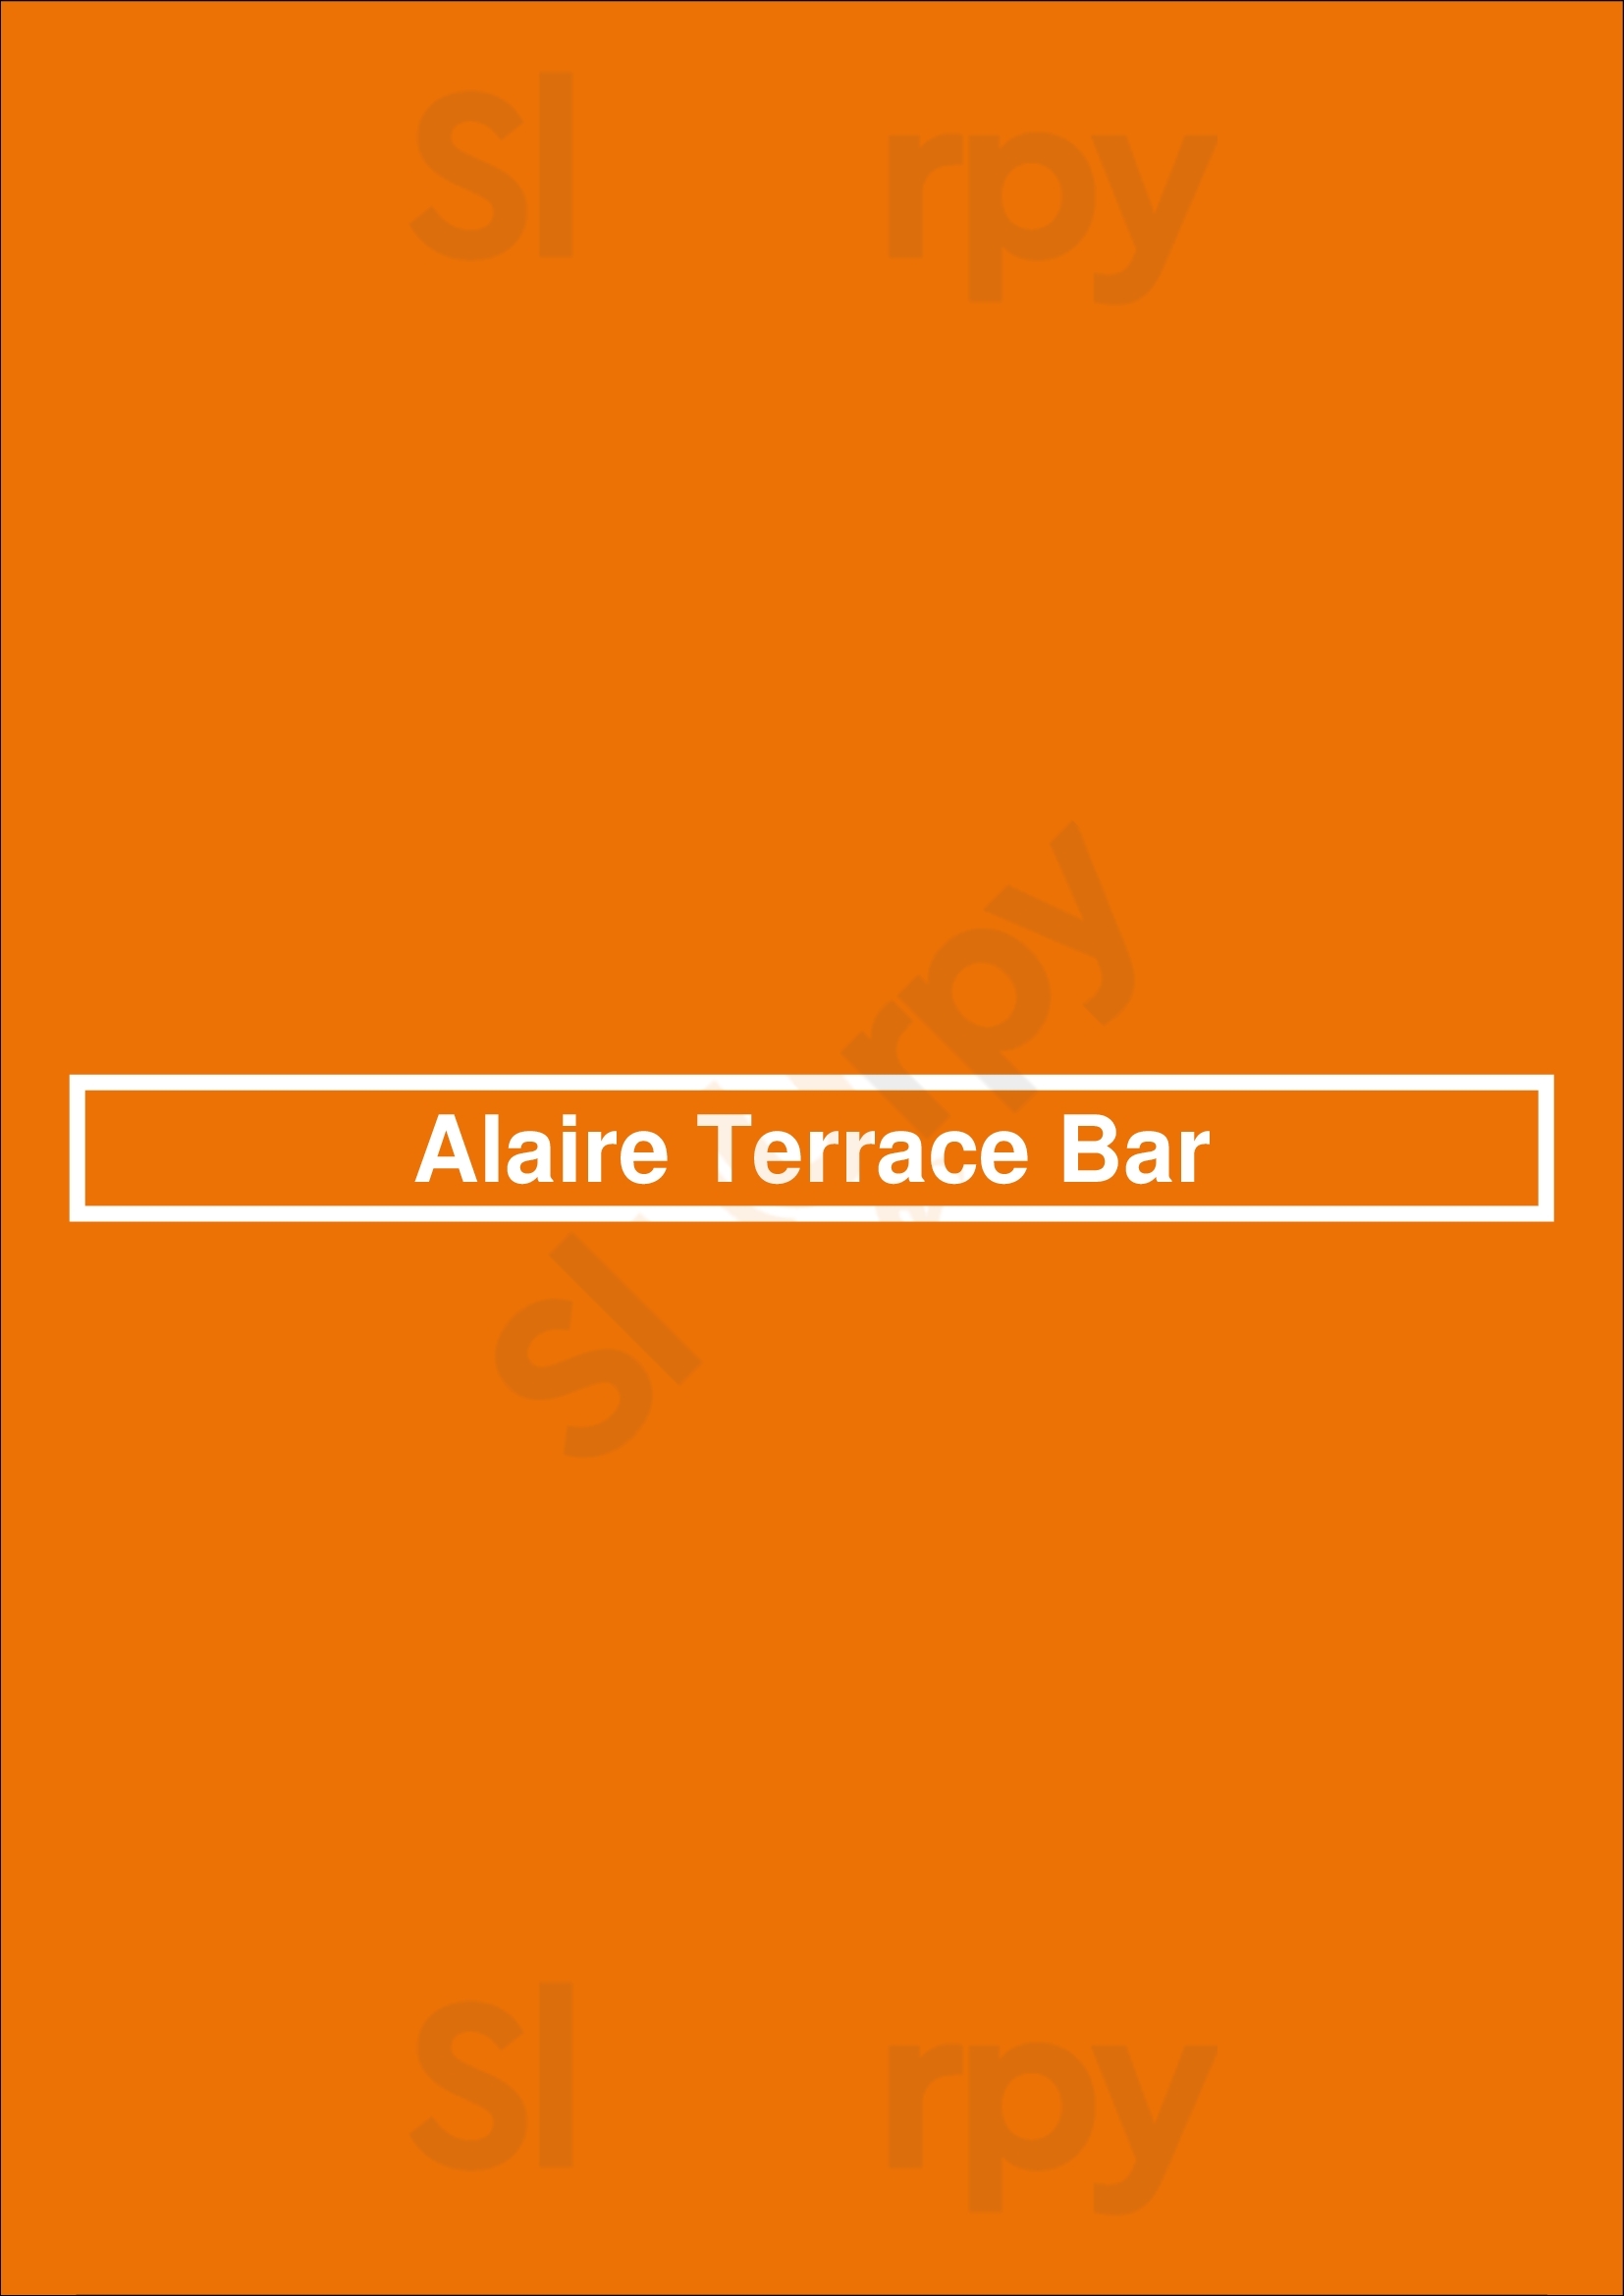 Alaire Terrace Bar Buenos Aires Menu - 1